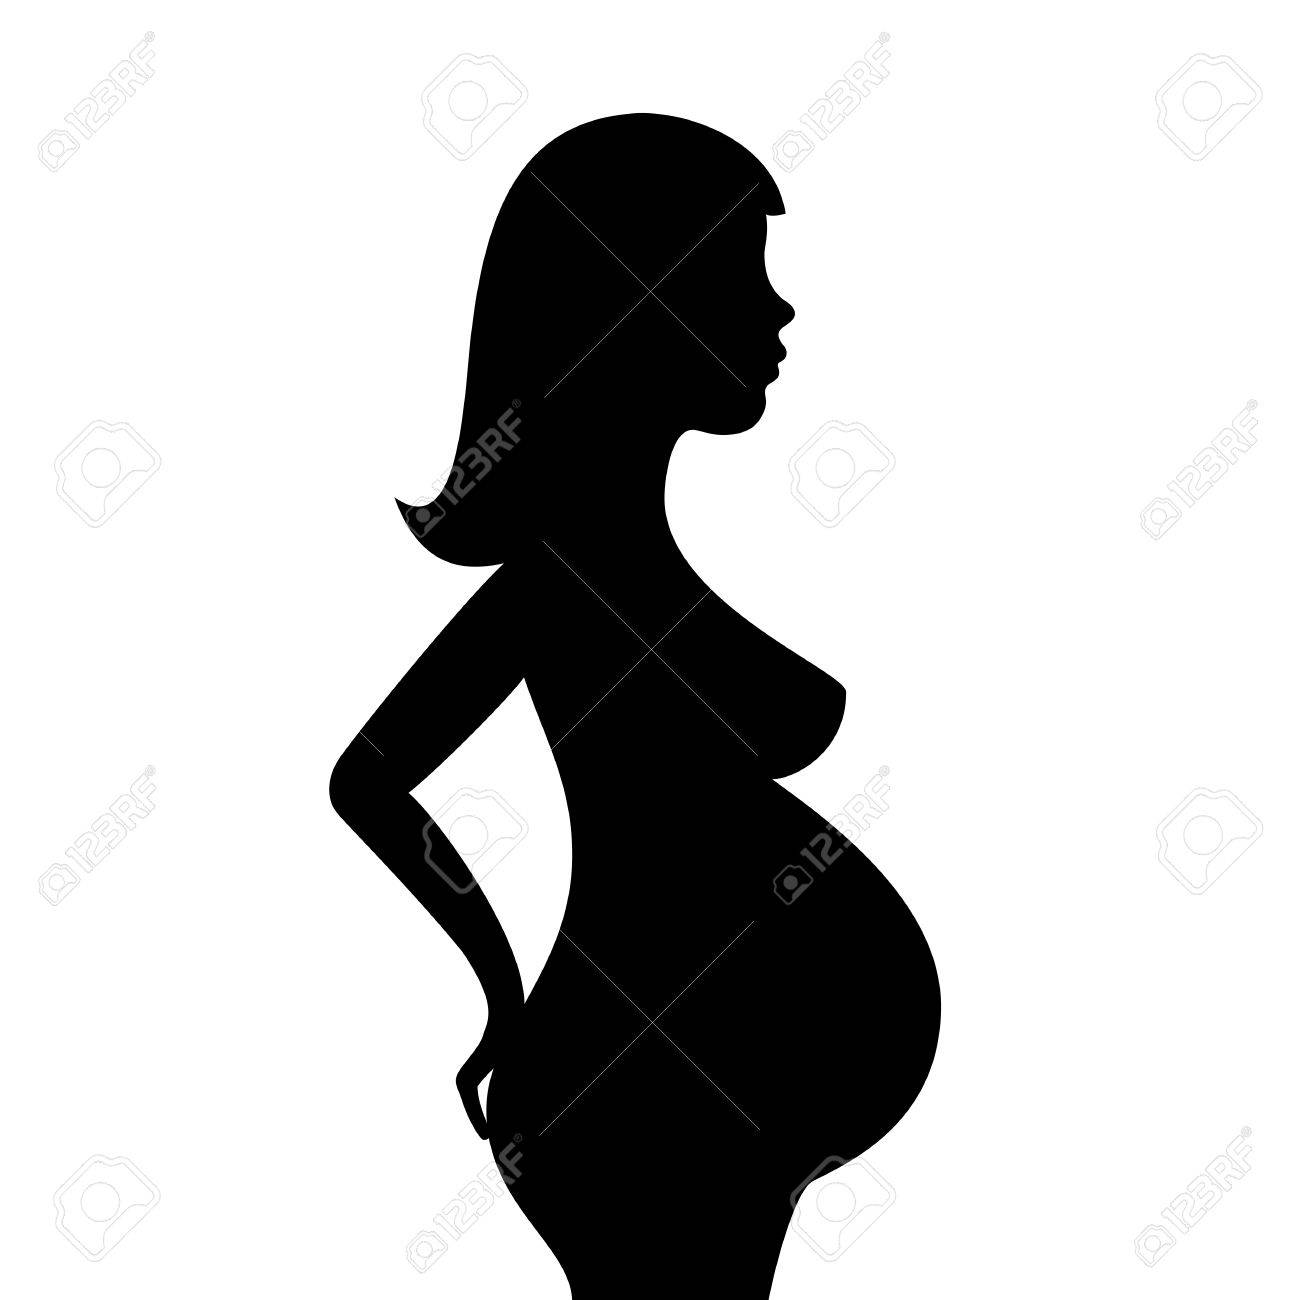 Pregnant woman icon | Public domain vectors